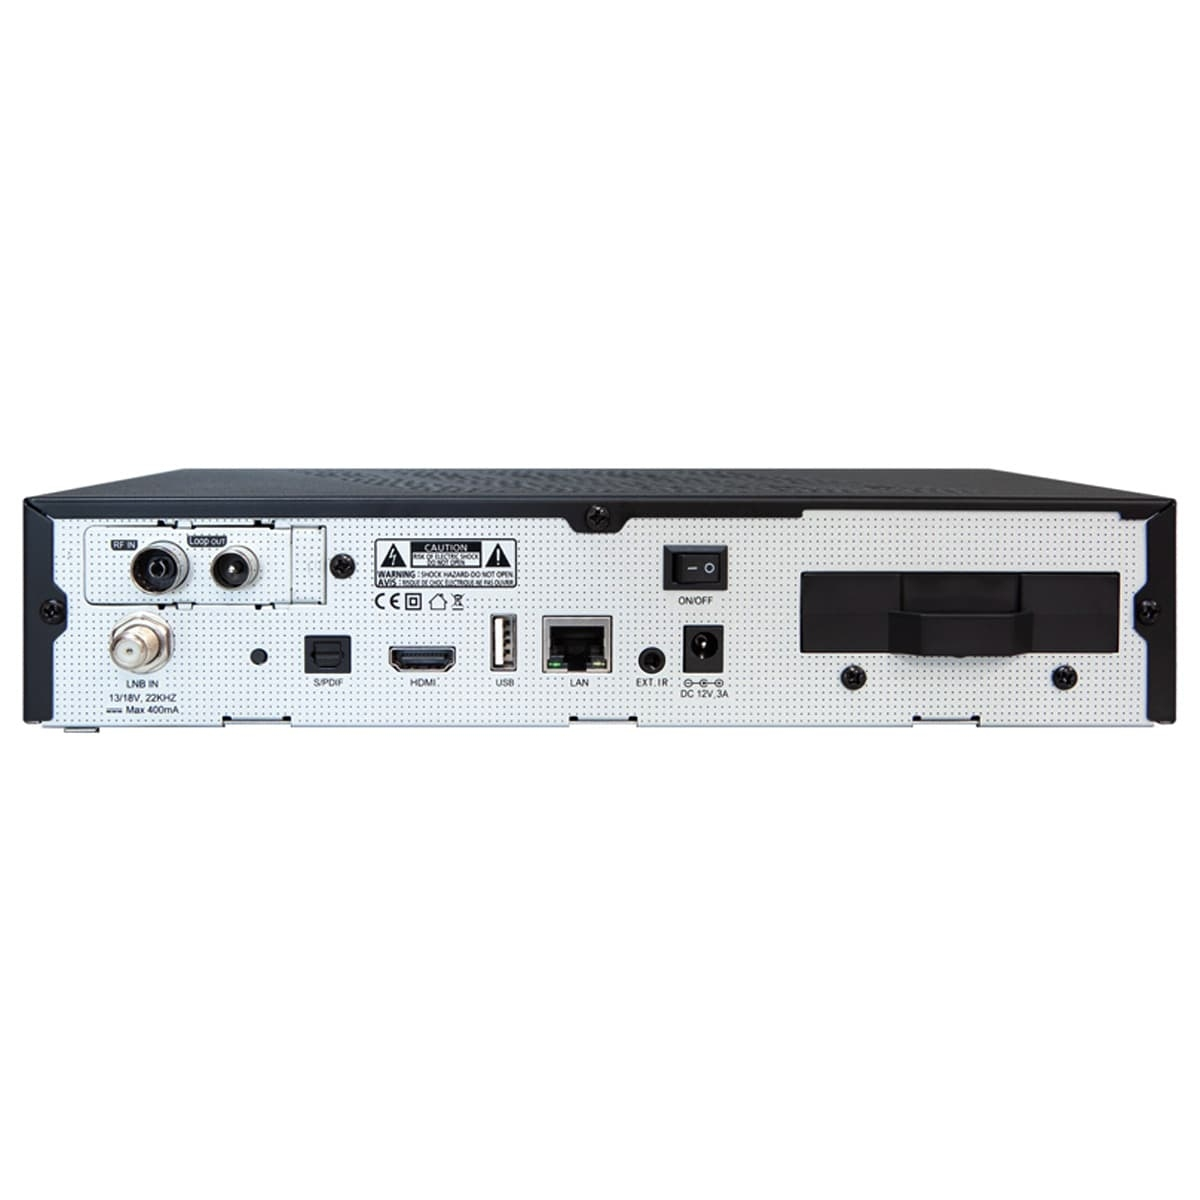 AB-COM PULSe 4K Combo DVB-C/T2 Twin Tuner, Schwarz) Sat-Receiver DVB-S2X (PVR-Funktion, 4TB